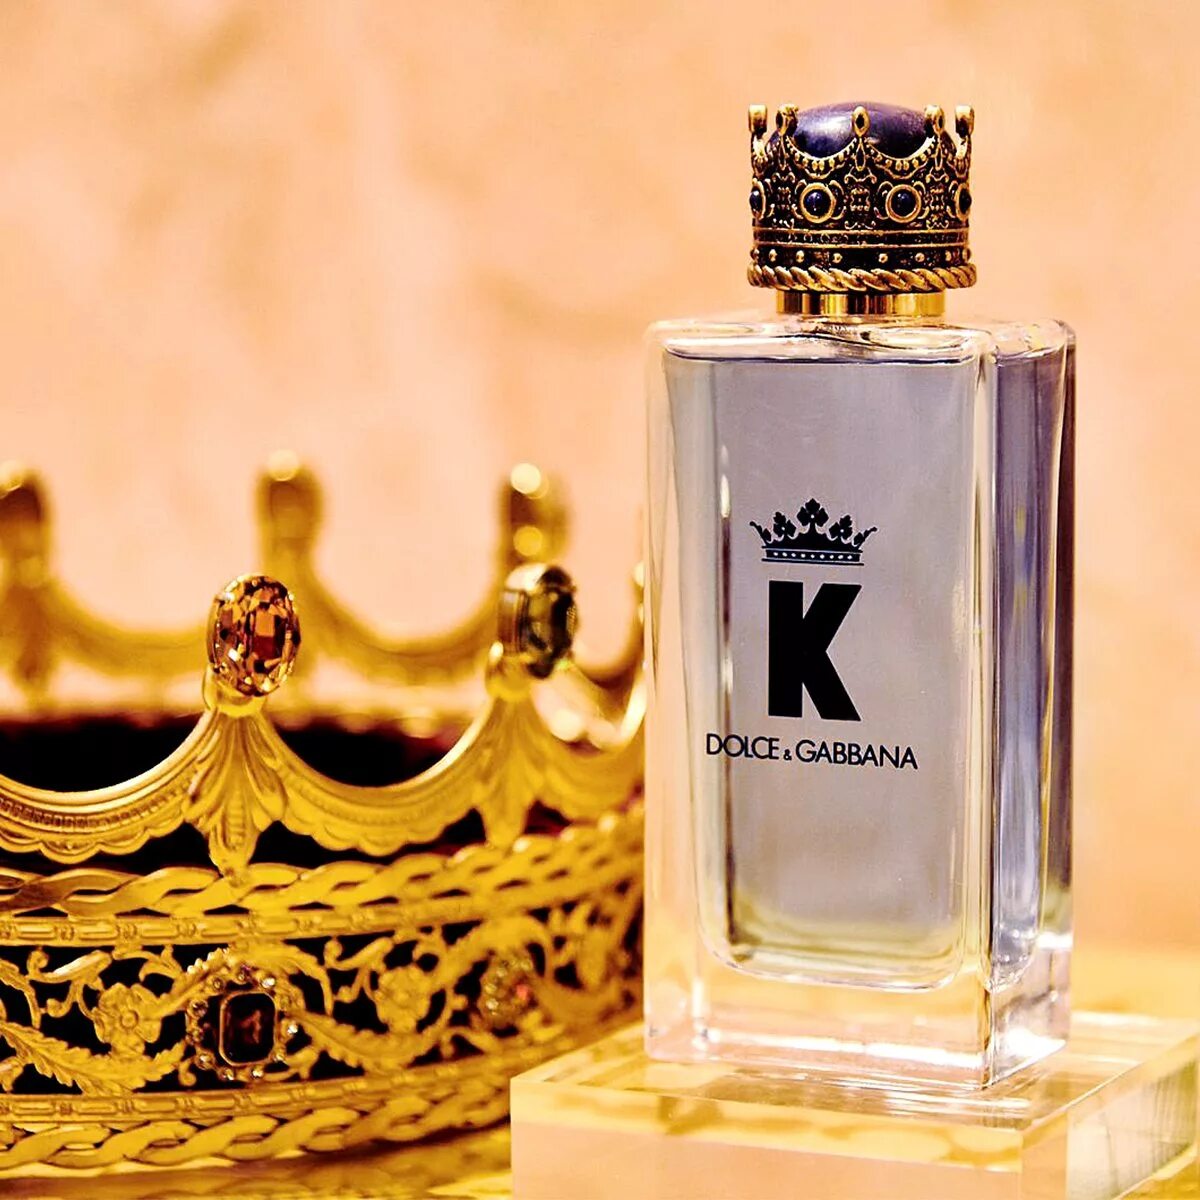 Дольче габбана королева духи. Dolce Gabbana King 100ml. Dolce Gabbana King Parfum. Dolce & Gabbana King Eau de Parfum 100 ml. Dolce Gabbana k King 100ml EDT.